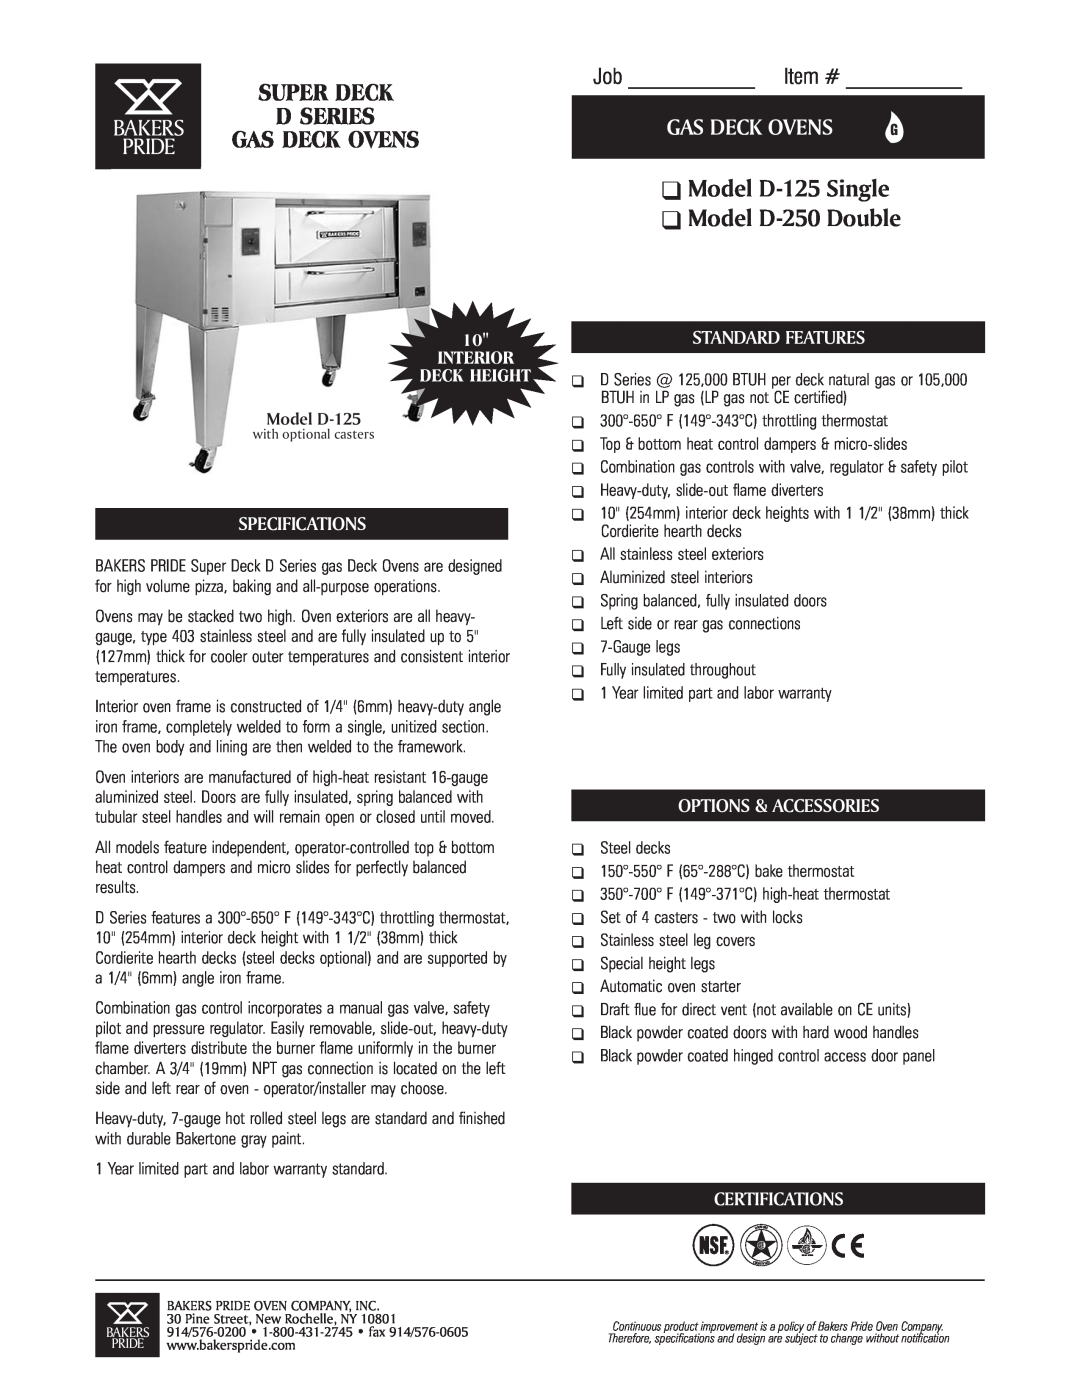 Bakers Pride Oven specifications Model D-125 Single Model D-250 Double, Gas Deck Ovens, Job Item #, Super Deck 